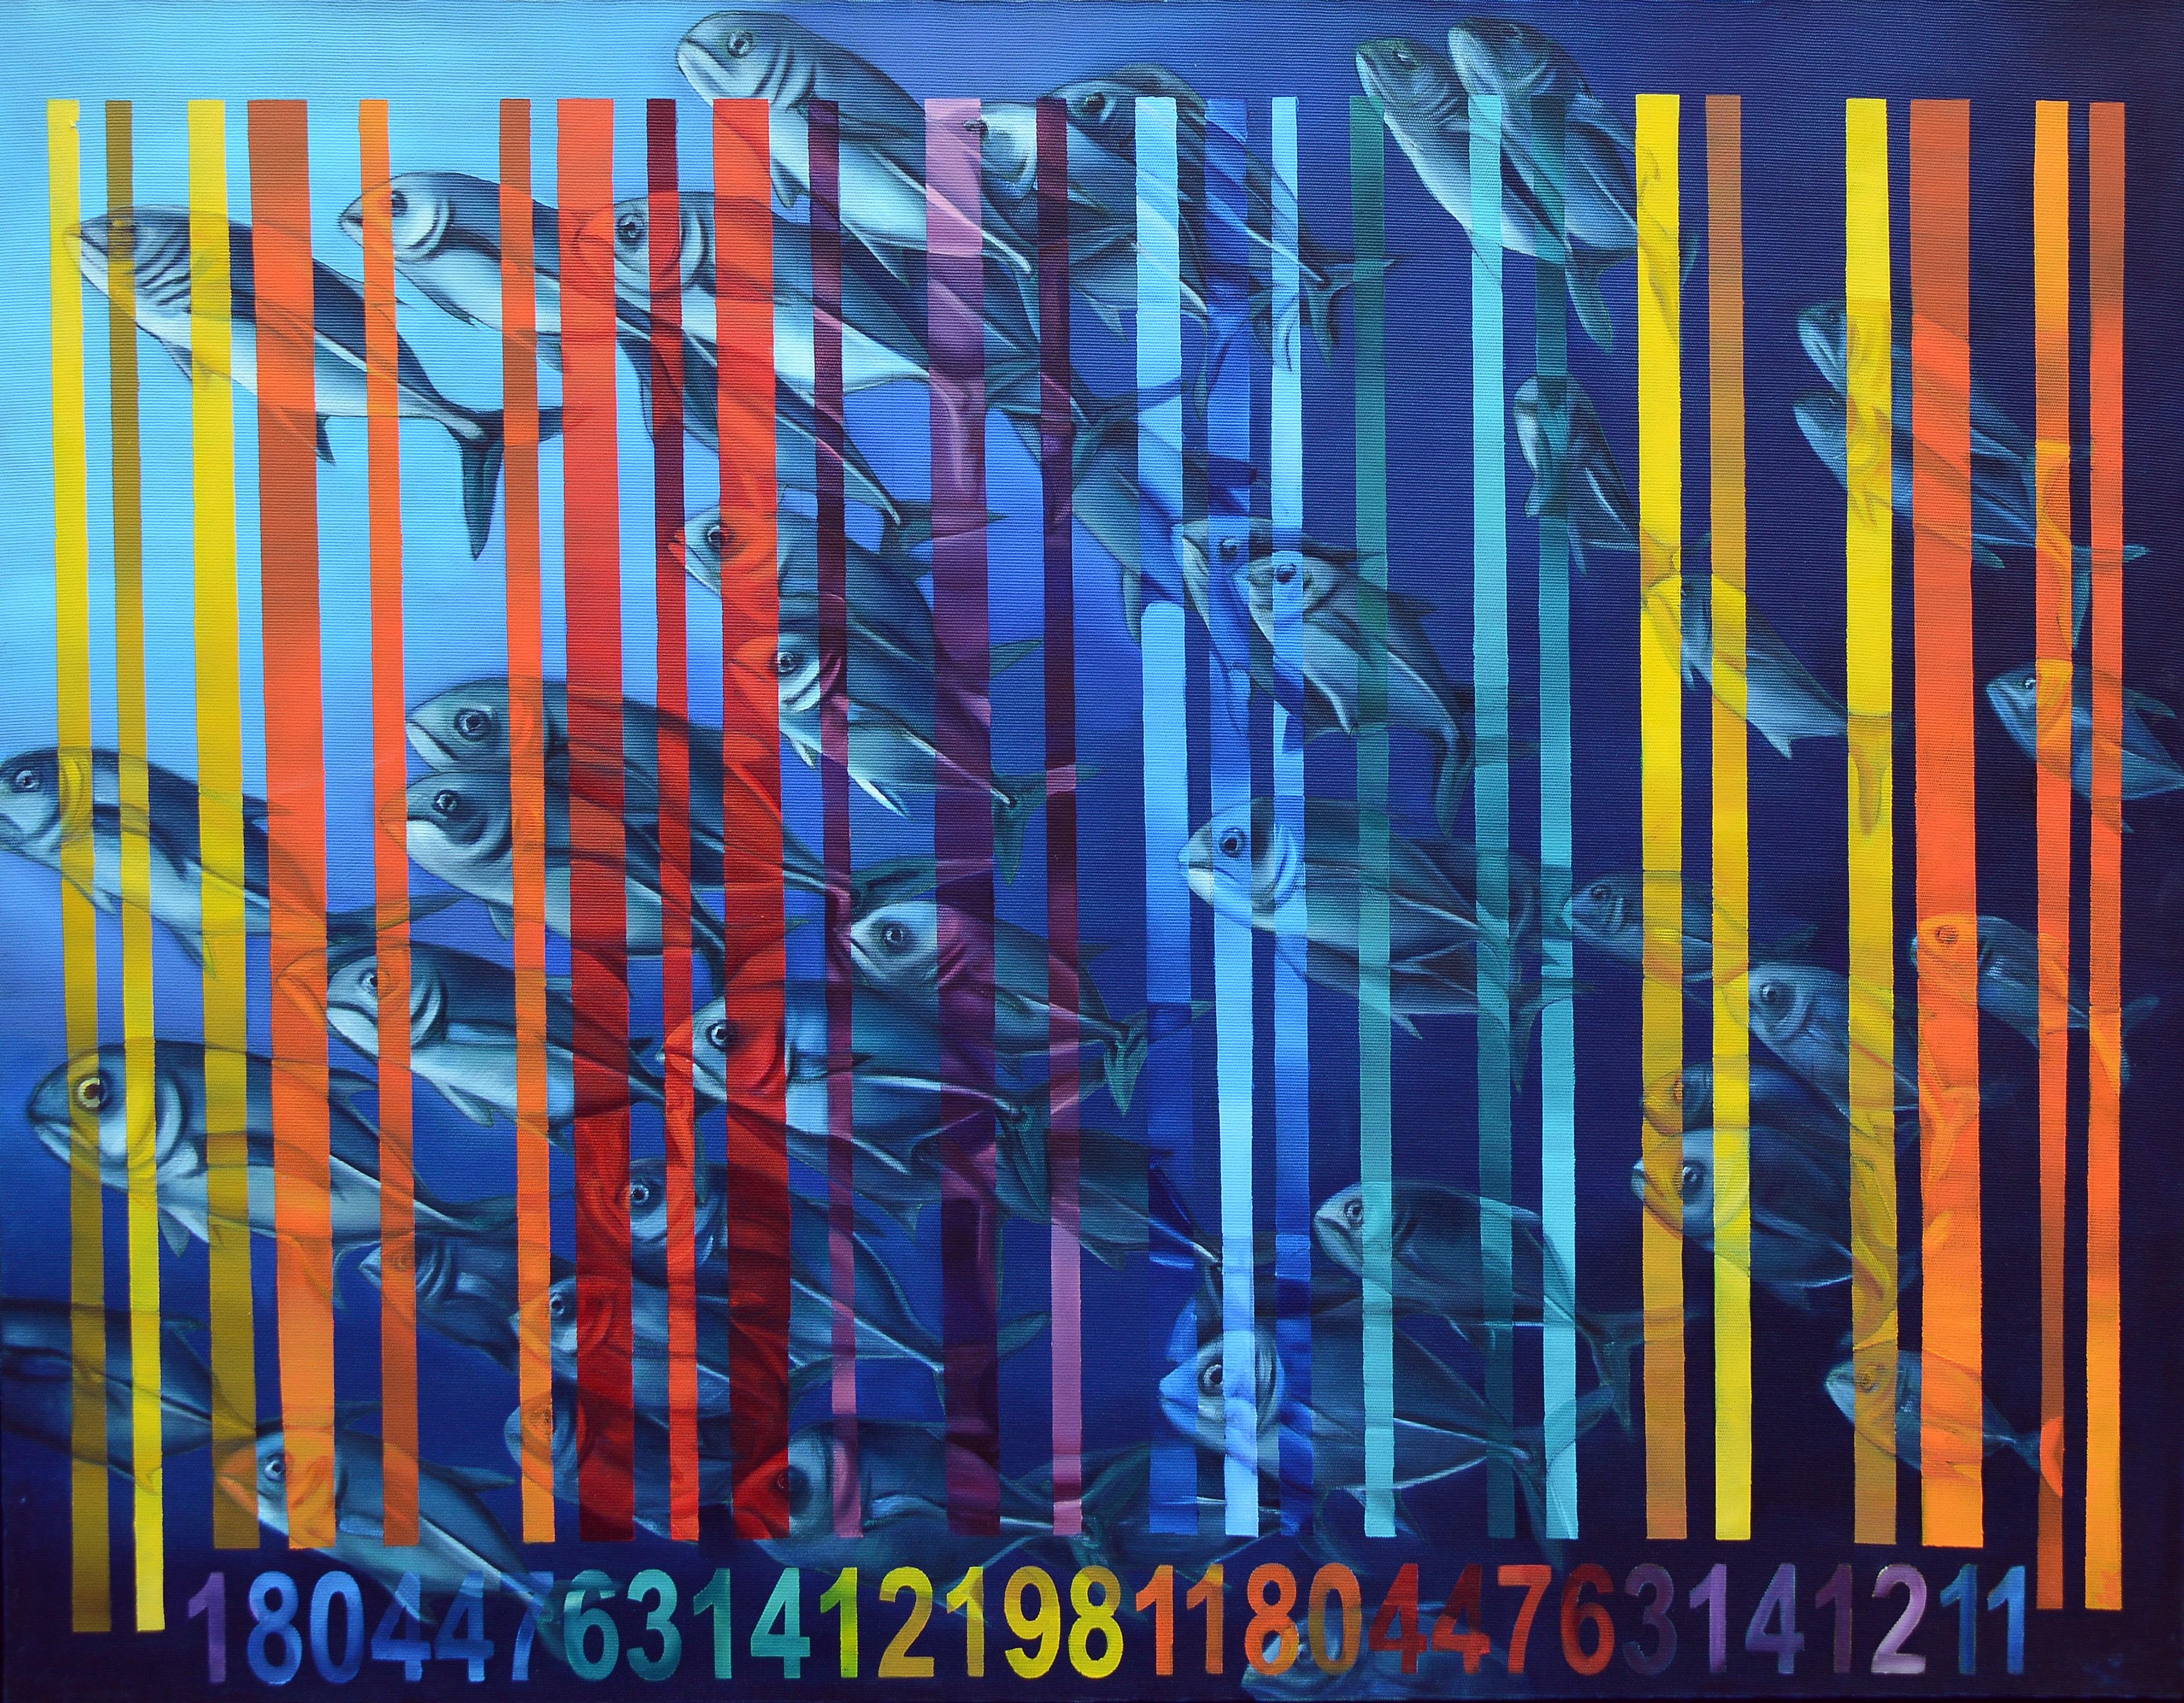 İsimsiz- Untitled, 2009, Tuval üzerine yağlıboya- Oil on canvas, 97x124 cm